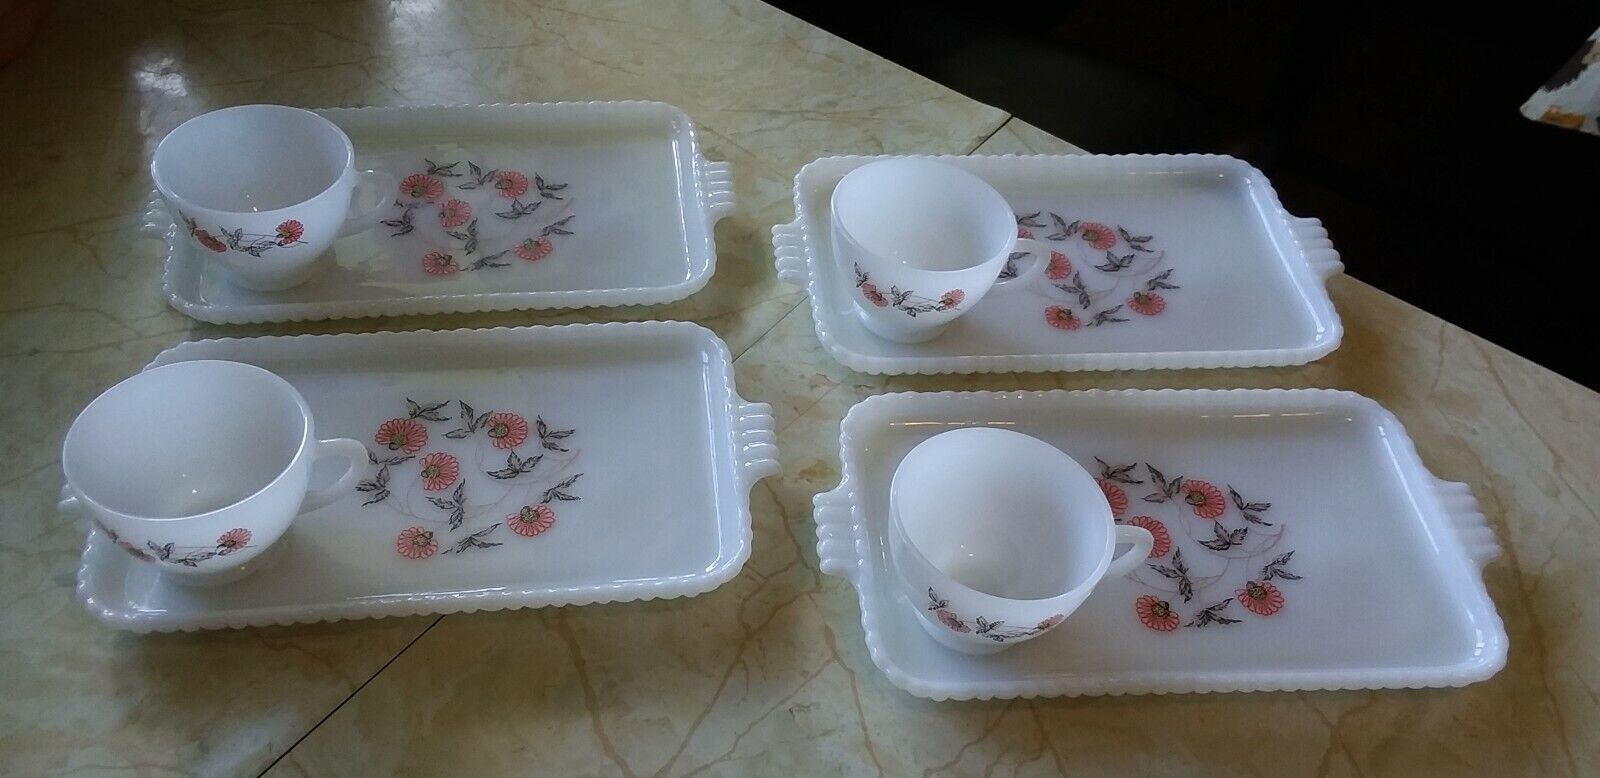 Vtg FireKing Fleurette Milk Glass Snack Trays Set Of 4 Plates 4 Cups - Good Cond